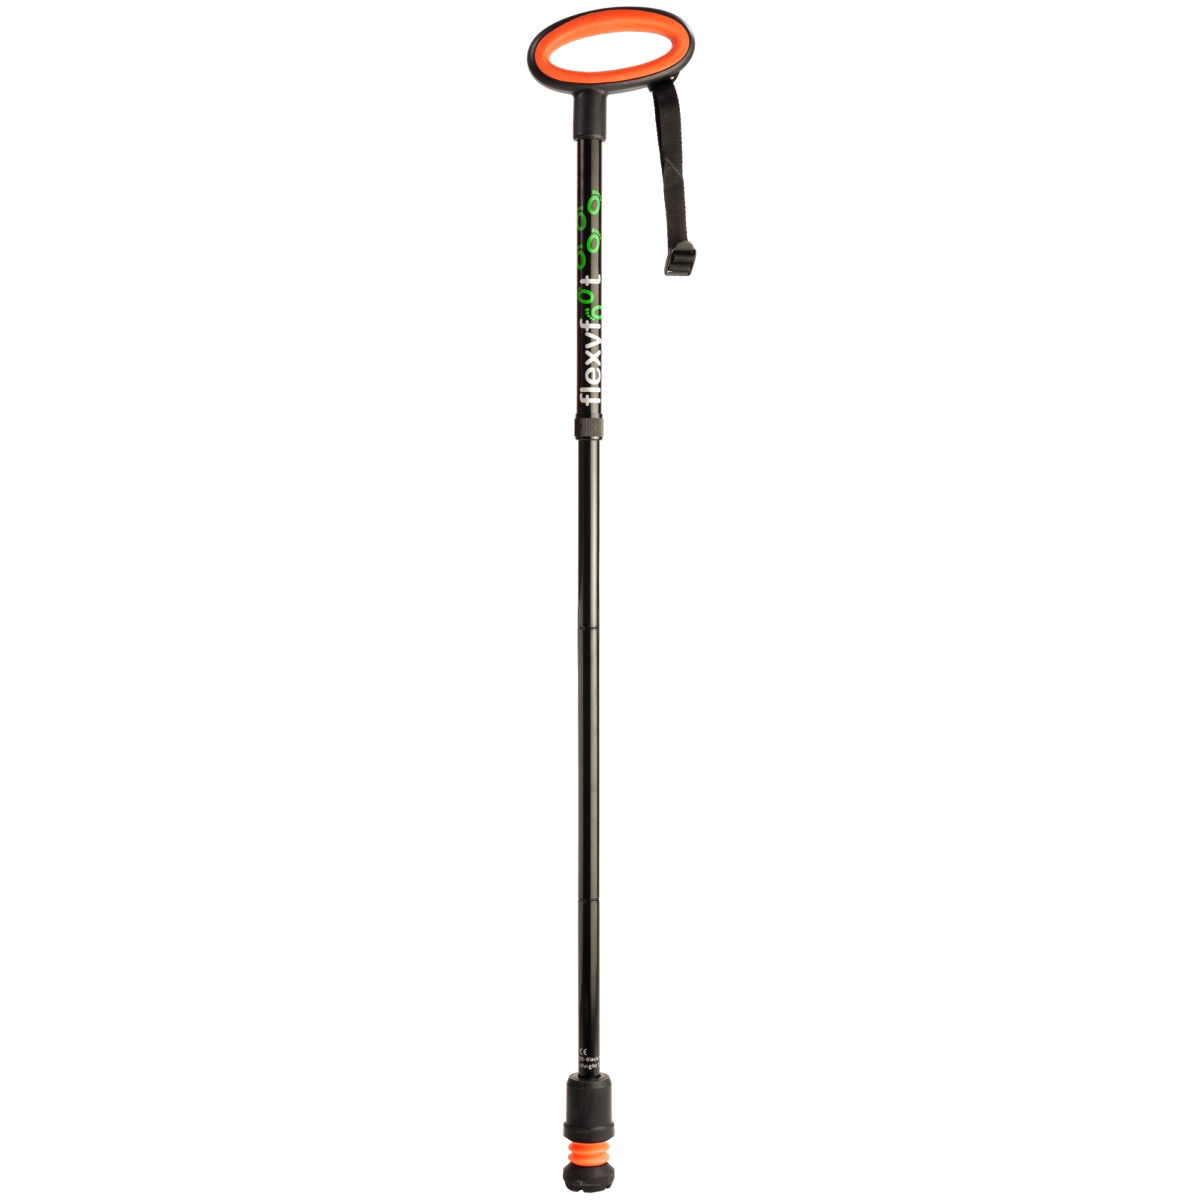 A single black Flexyfoot Premium Oval Handle Folding Walking Stick